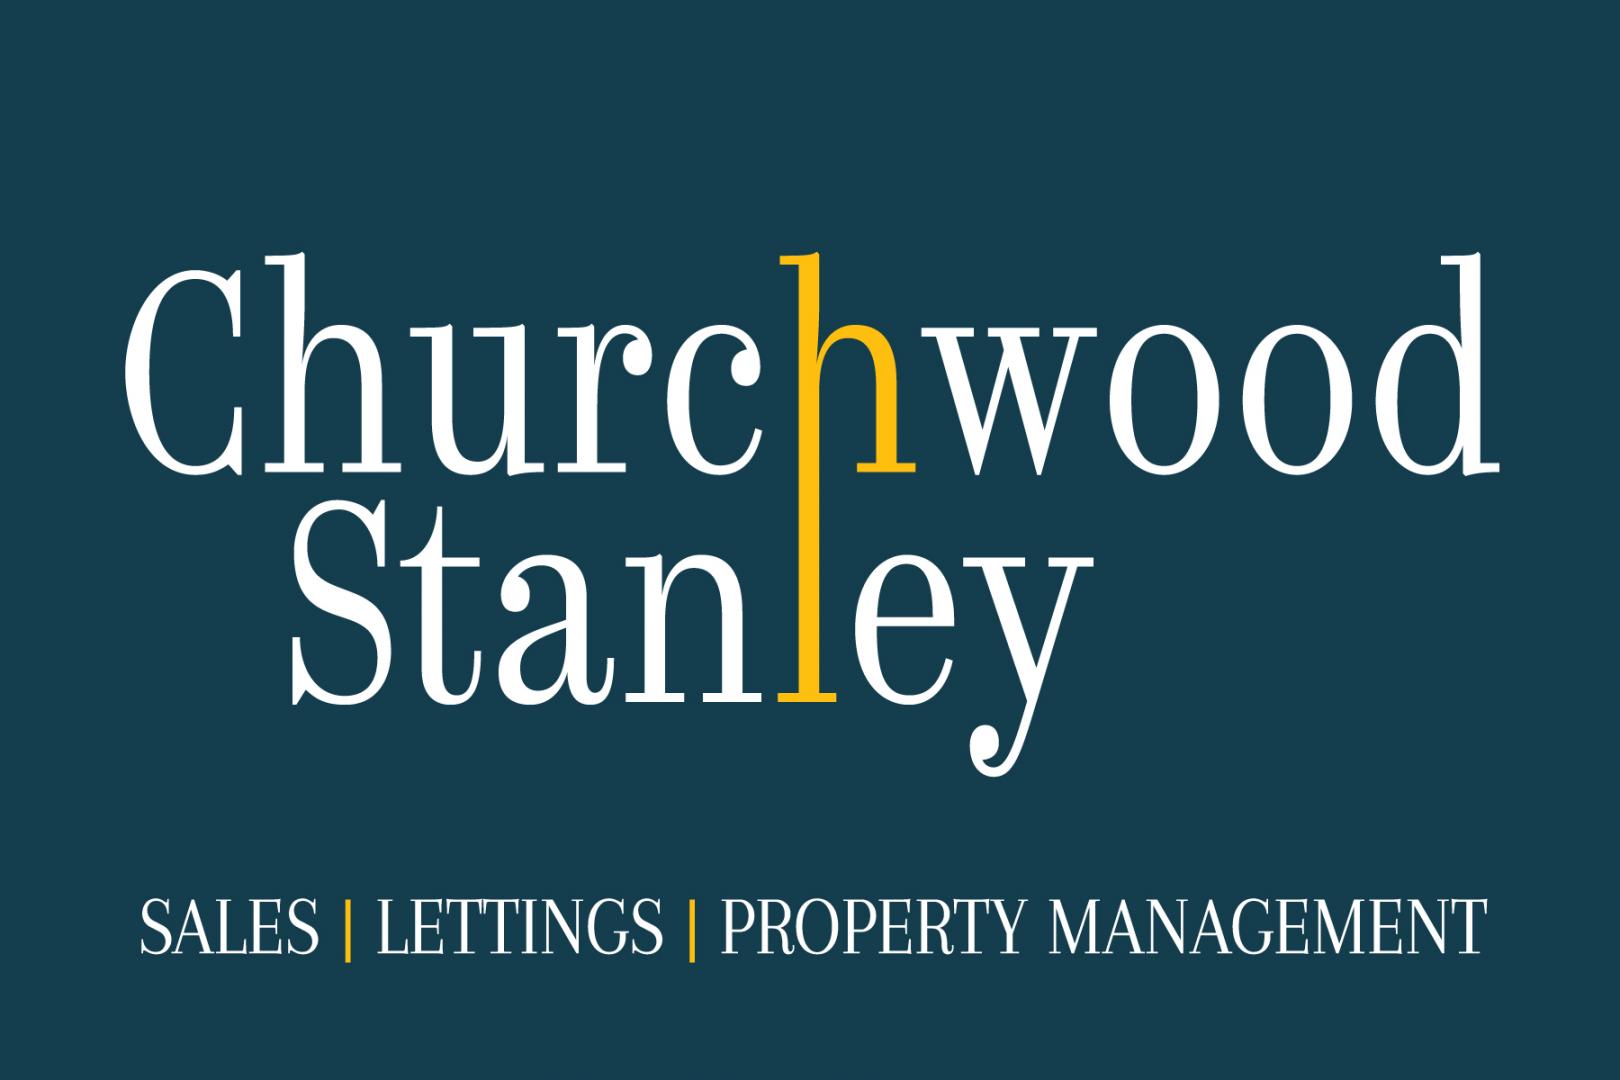 Churchwood Stanley in Manningtree